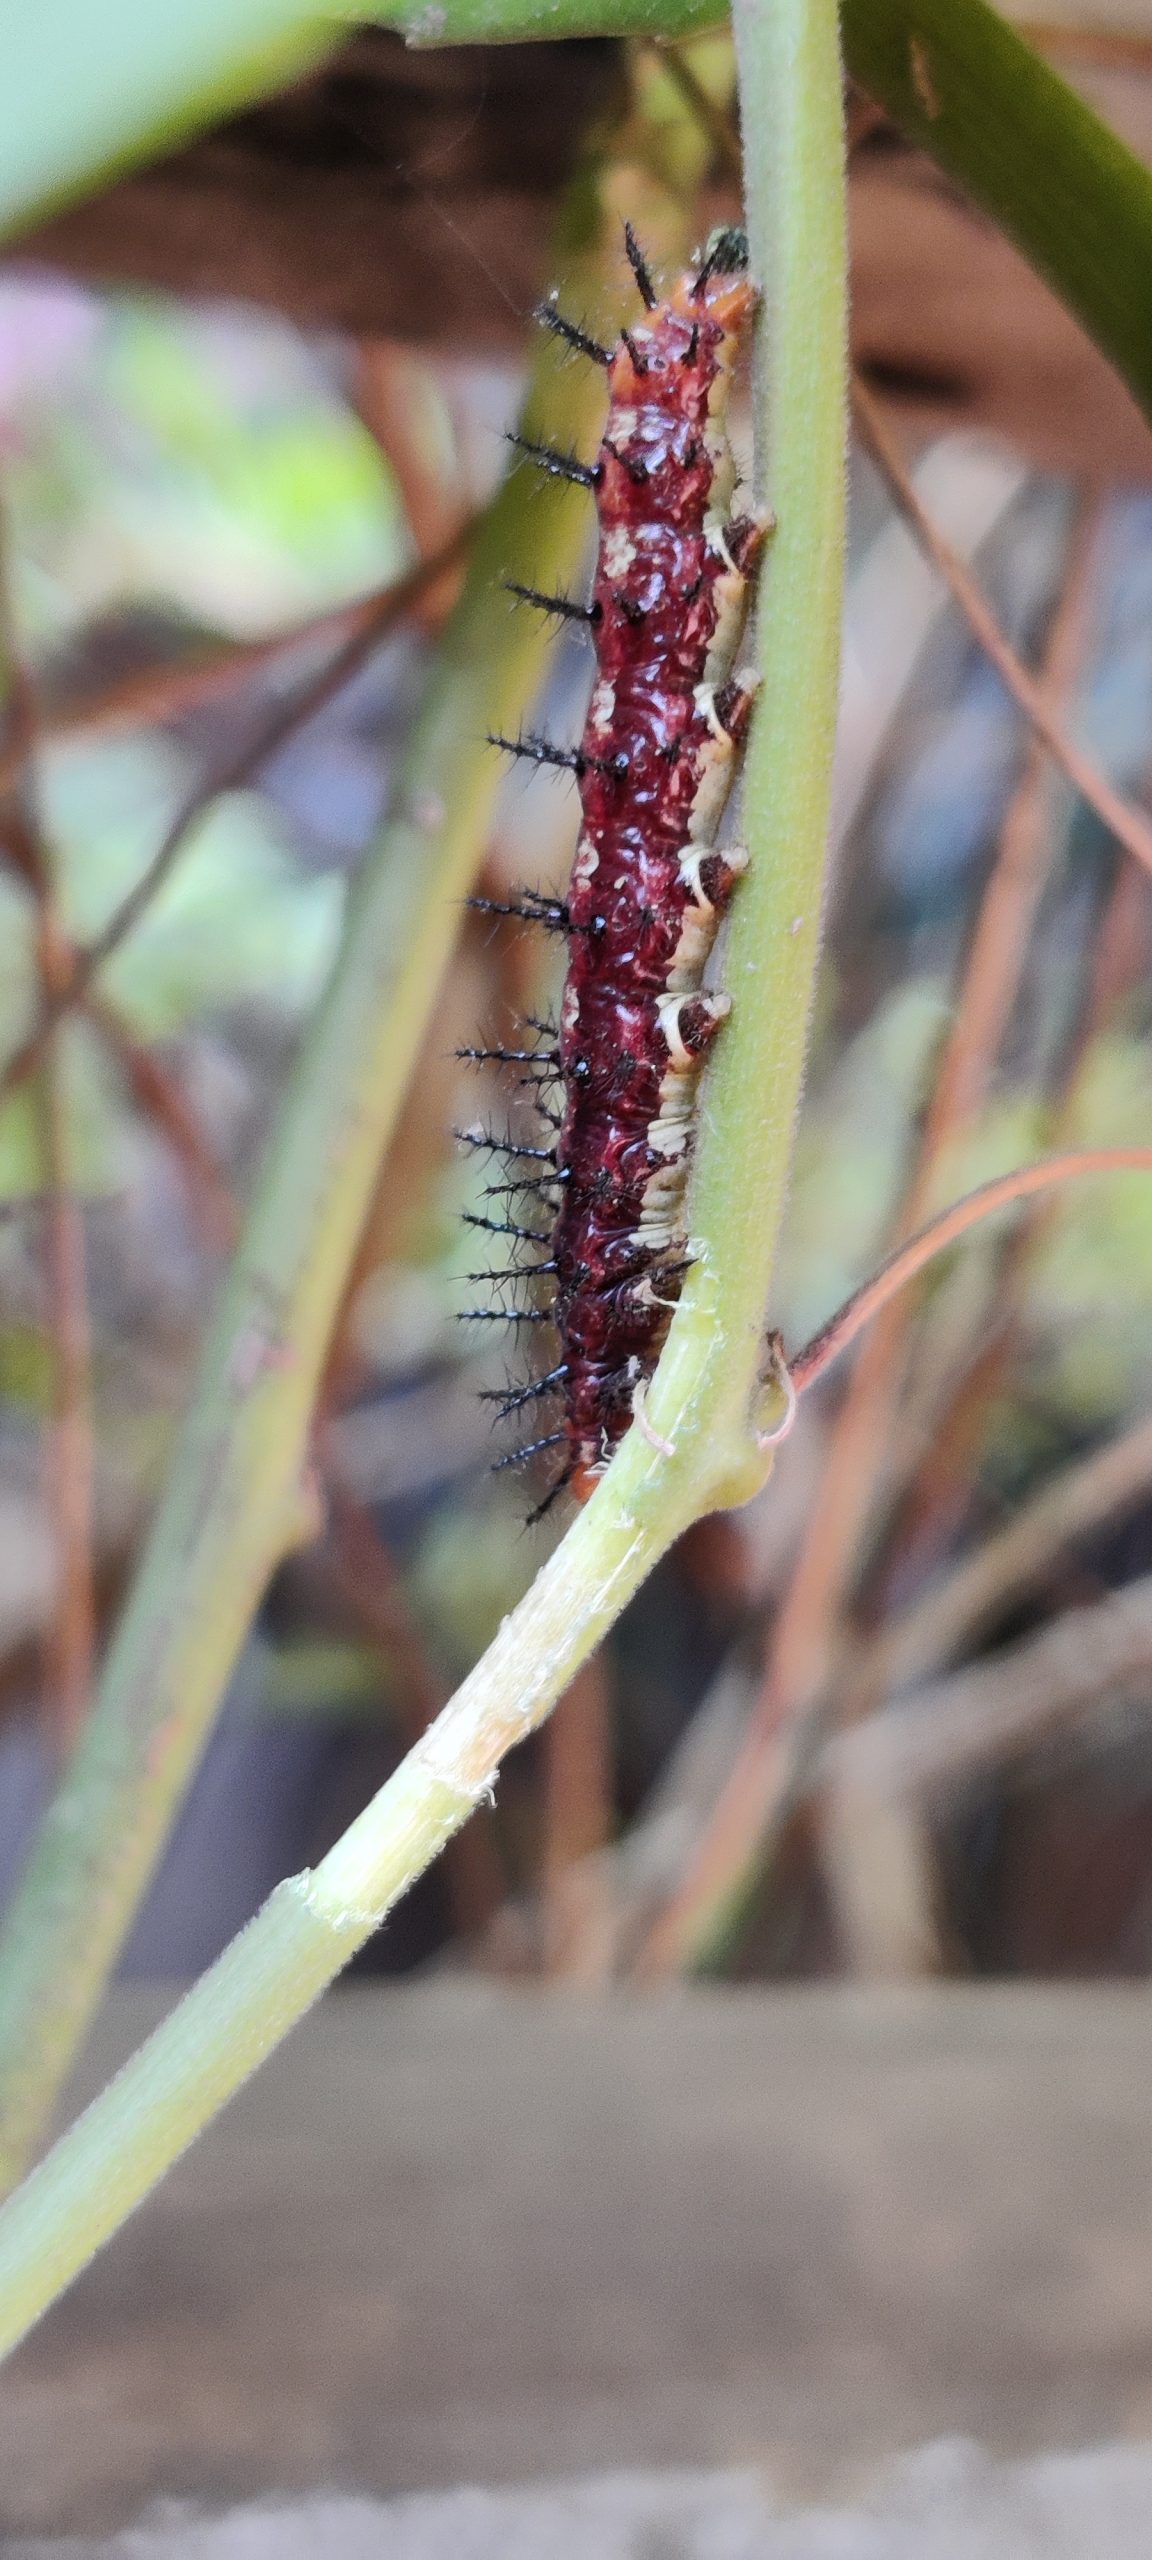 Caterpillar on the crop